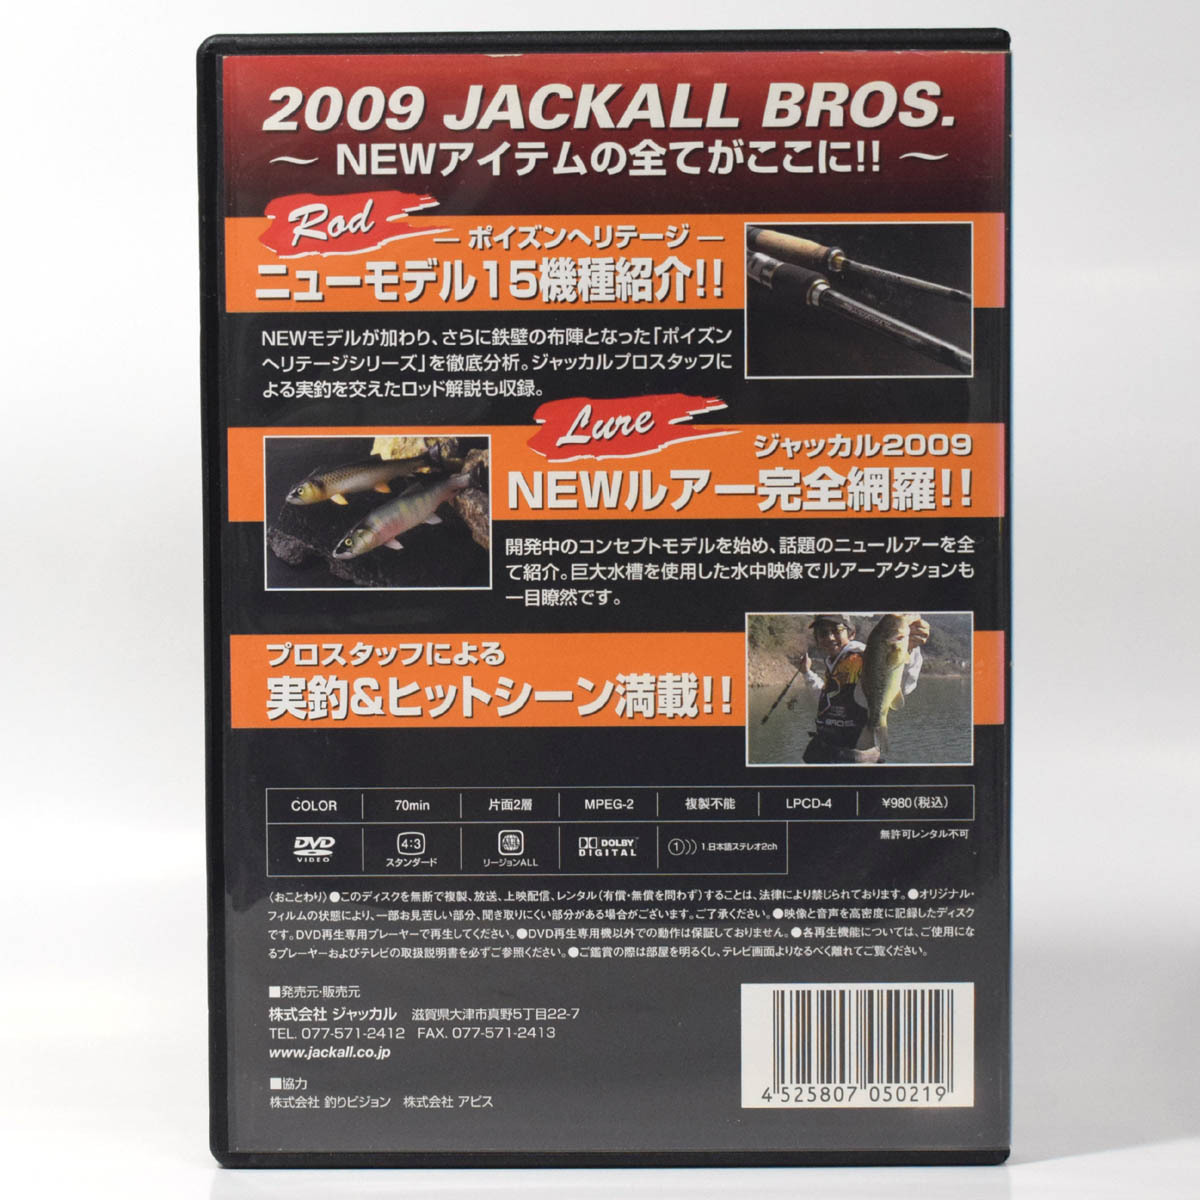 [DVD] INFINITY JACKALL BROS.CONCEPT DVD 2009 釣り インフィニティ ジャッカル2009コンセプトDVD [S203441]_画像2